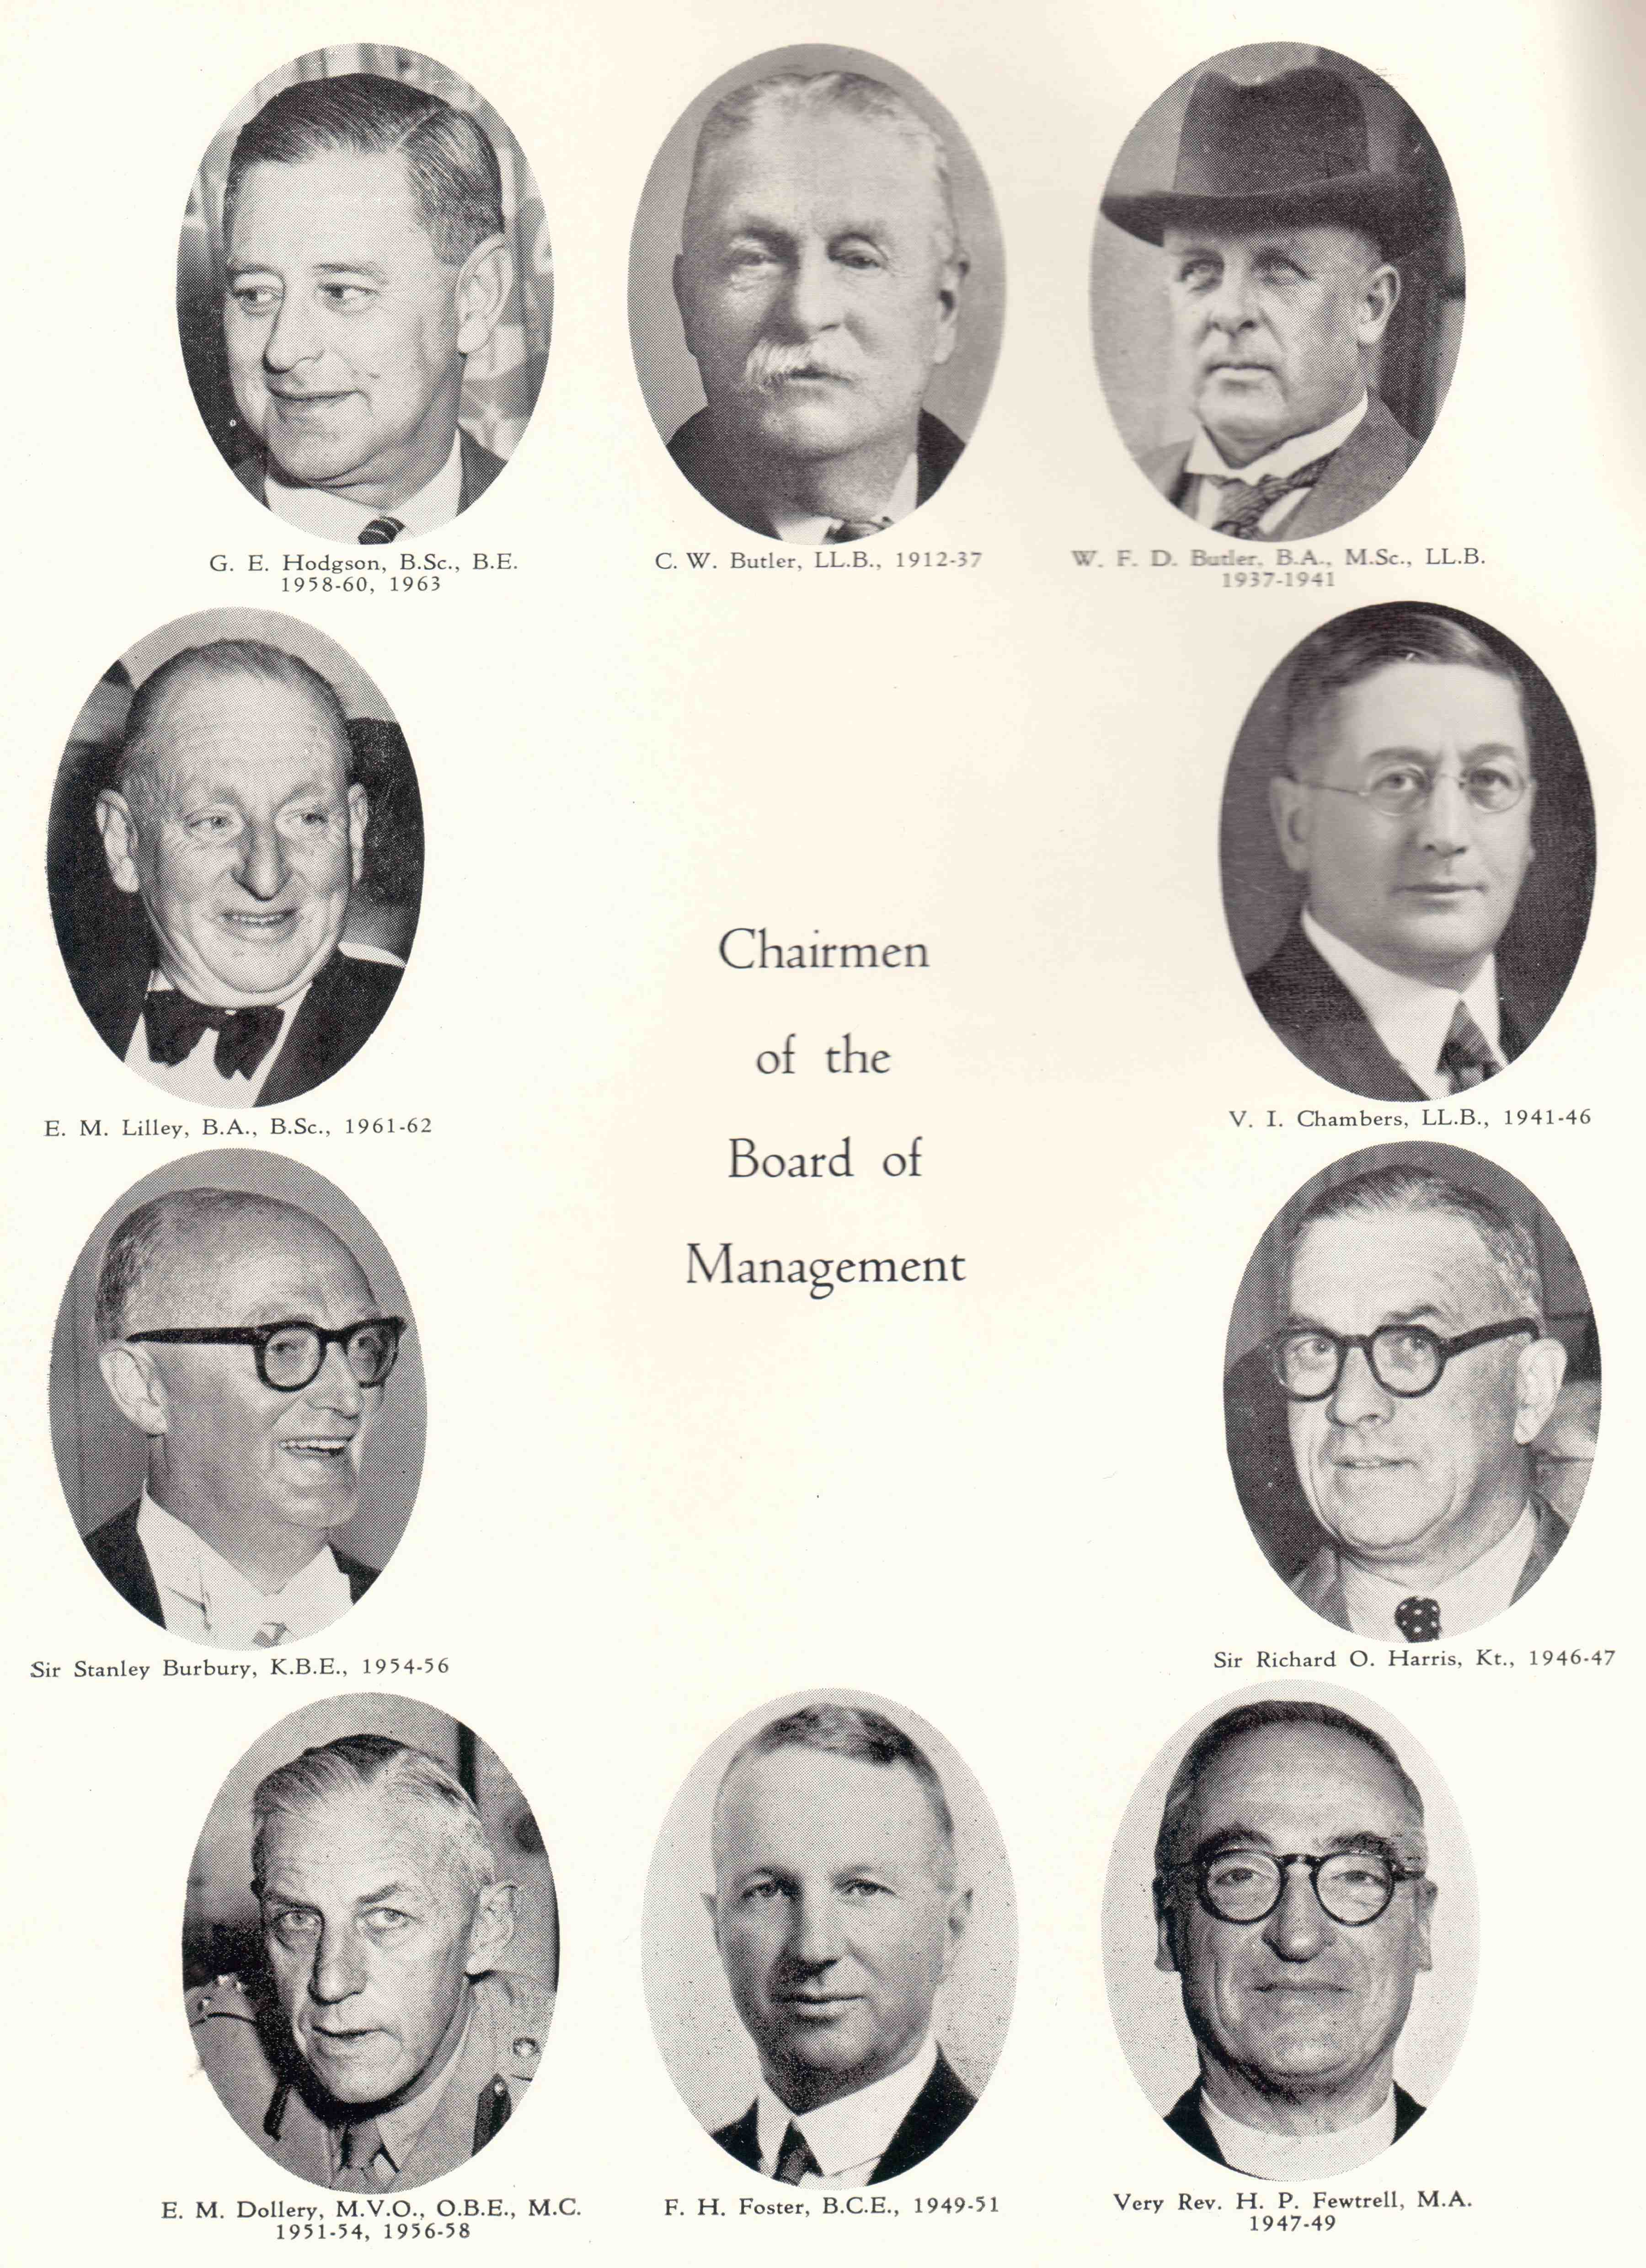 Chairmen of Board, 1912–63 (C W Butler top row, centre).